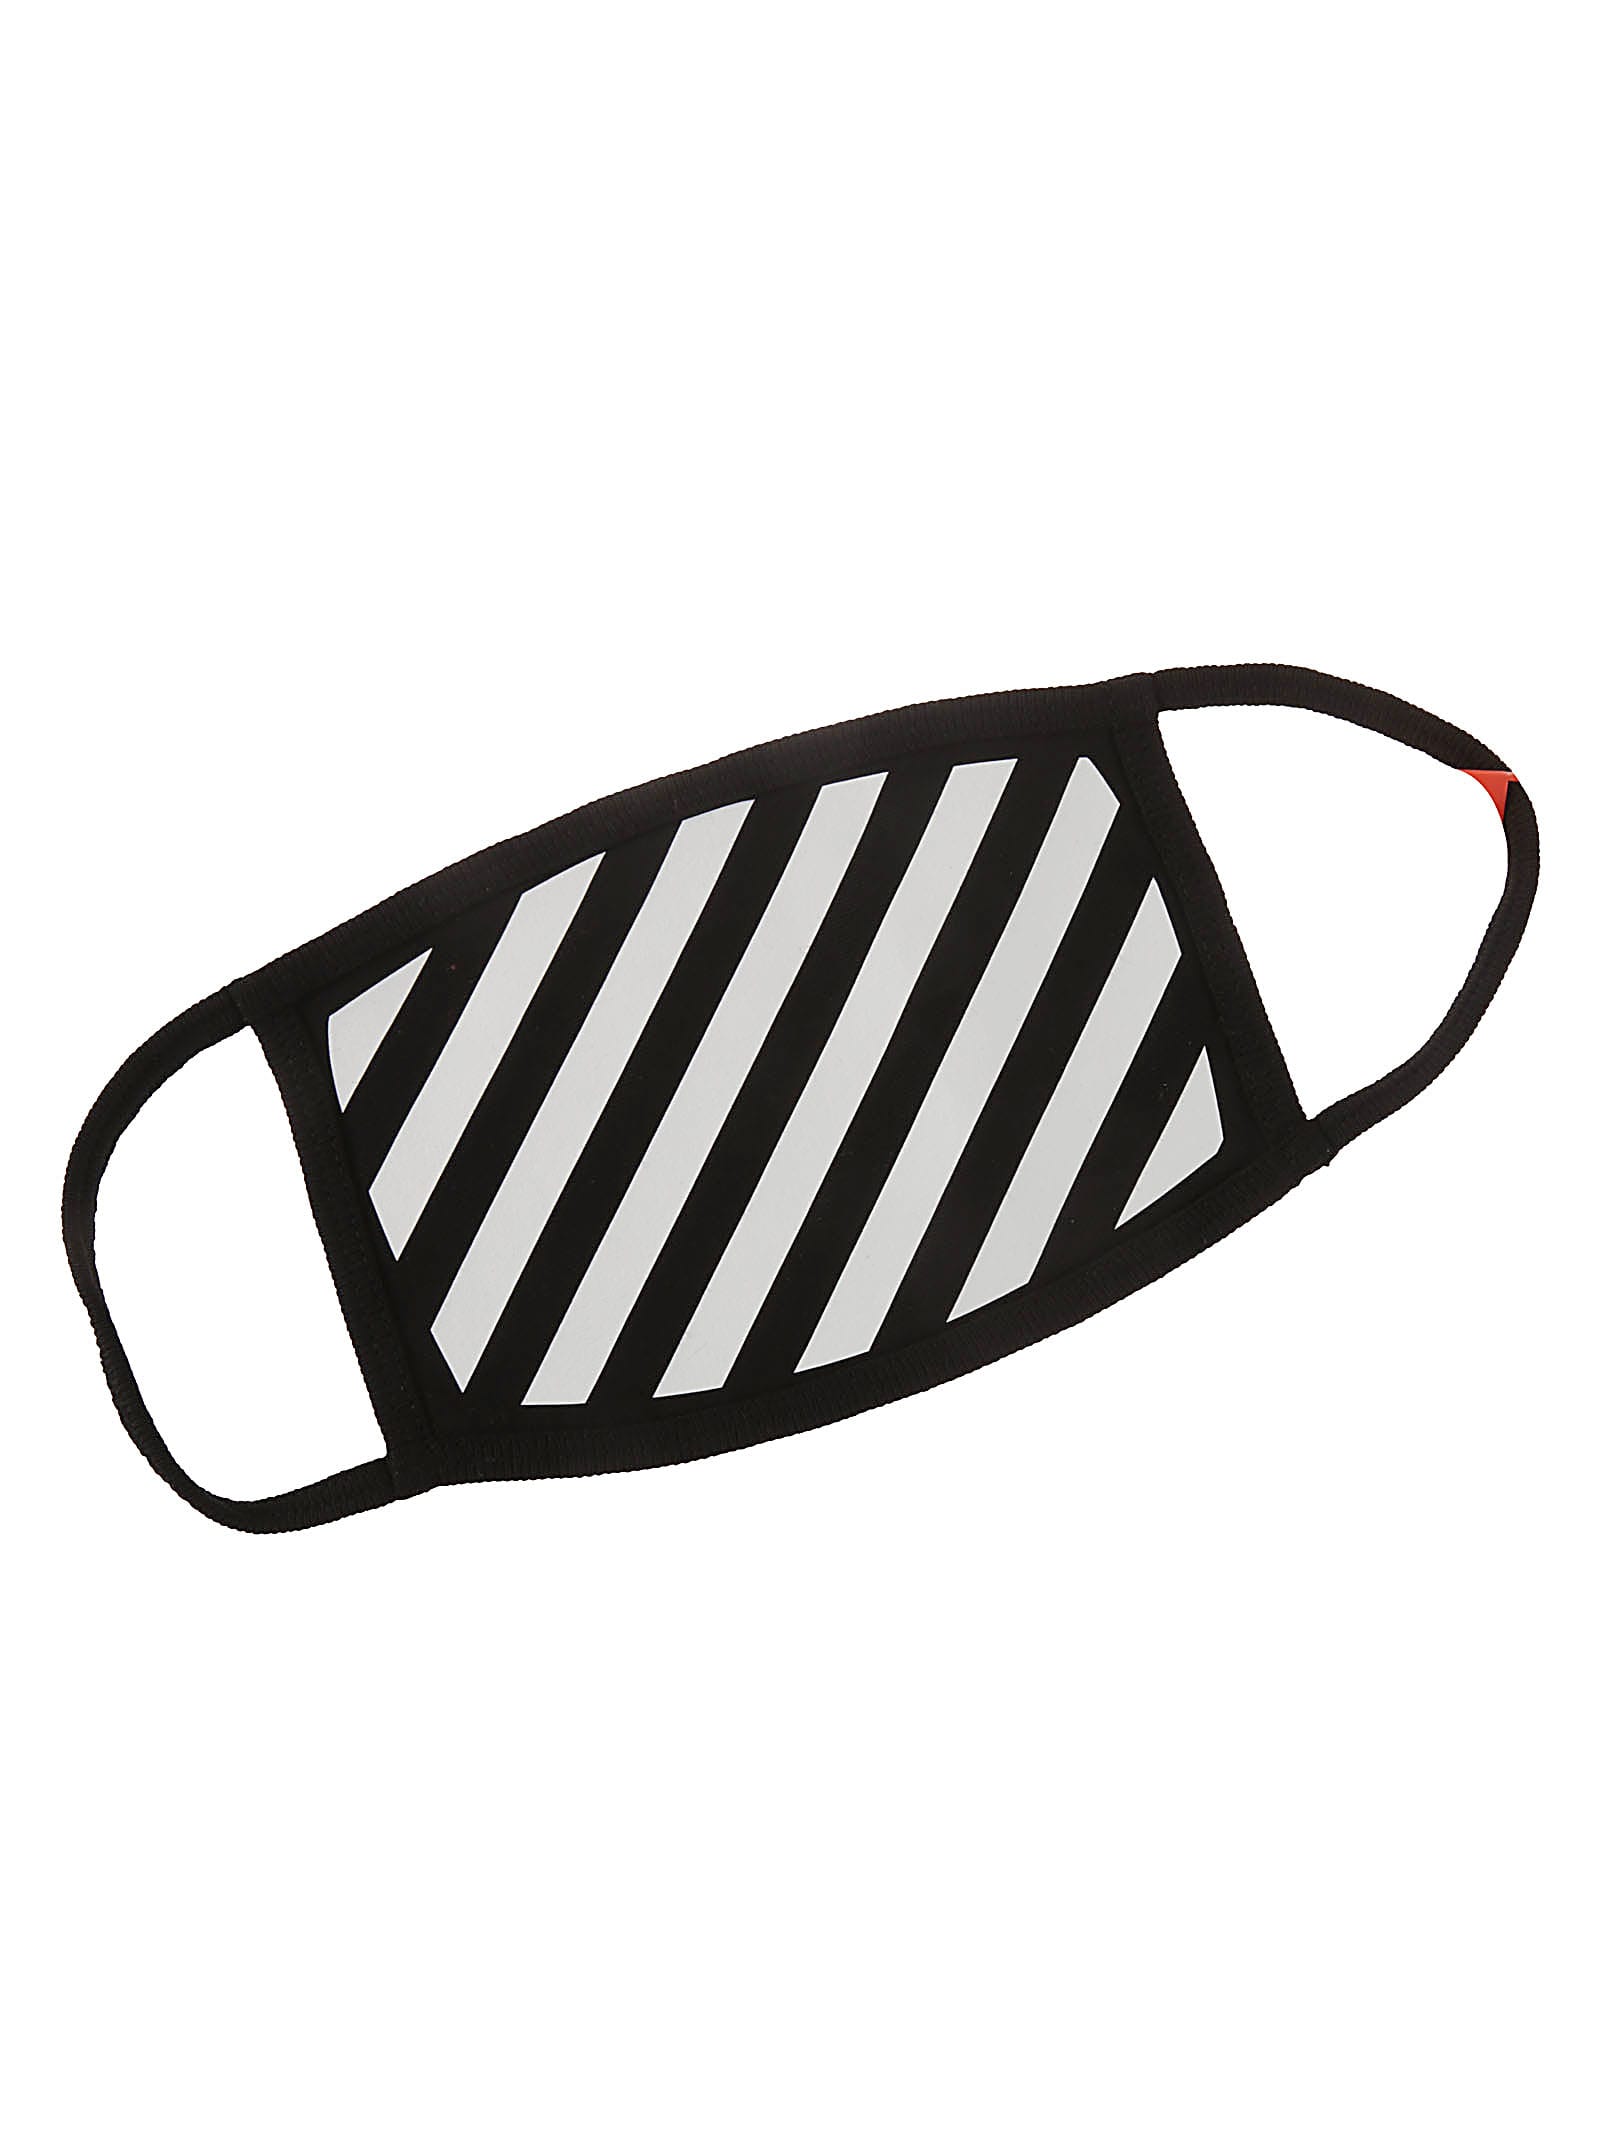 Off-White Diag Stripe Mask